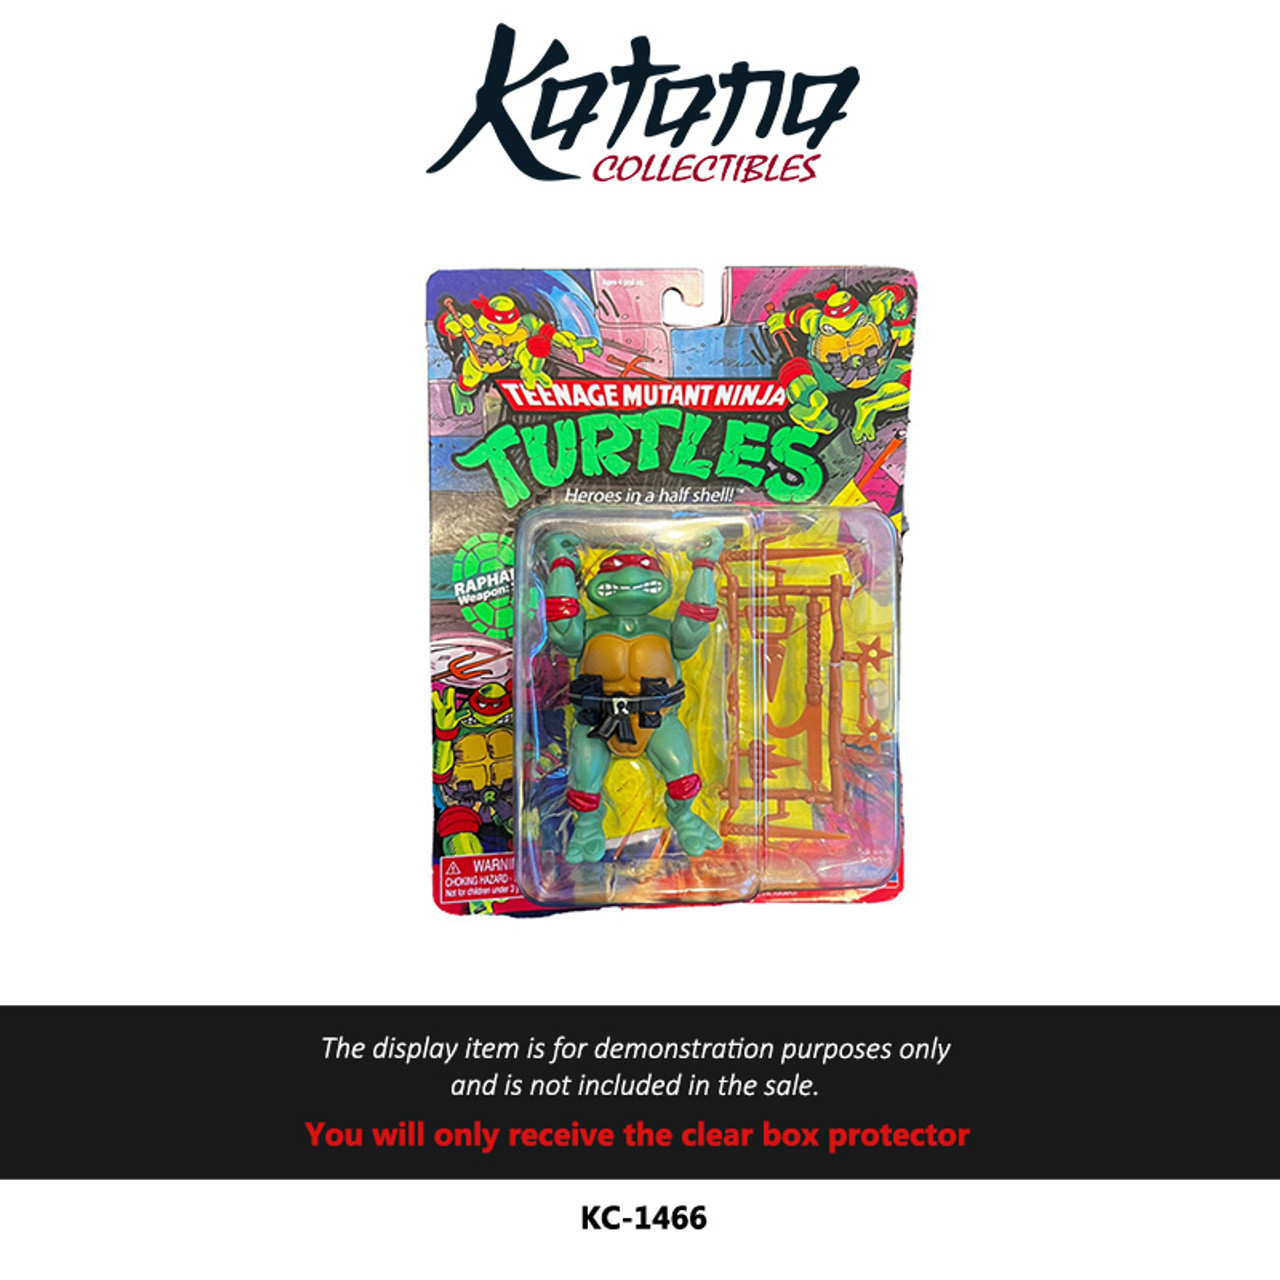 Katana Collectibles Protector For Playmates Original Teenage Mutant Ninja Turtles Leonardo Figure